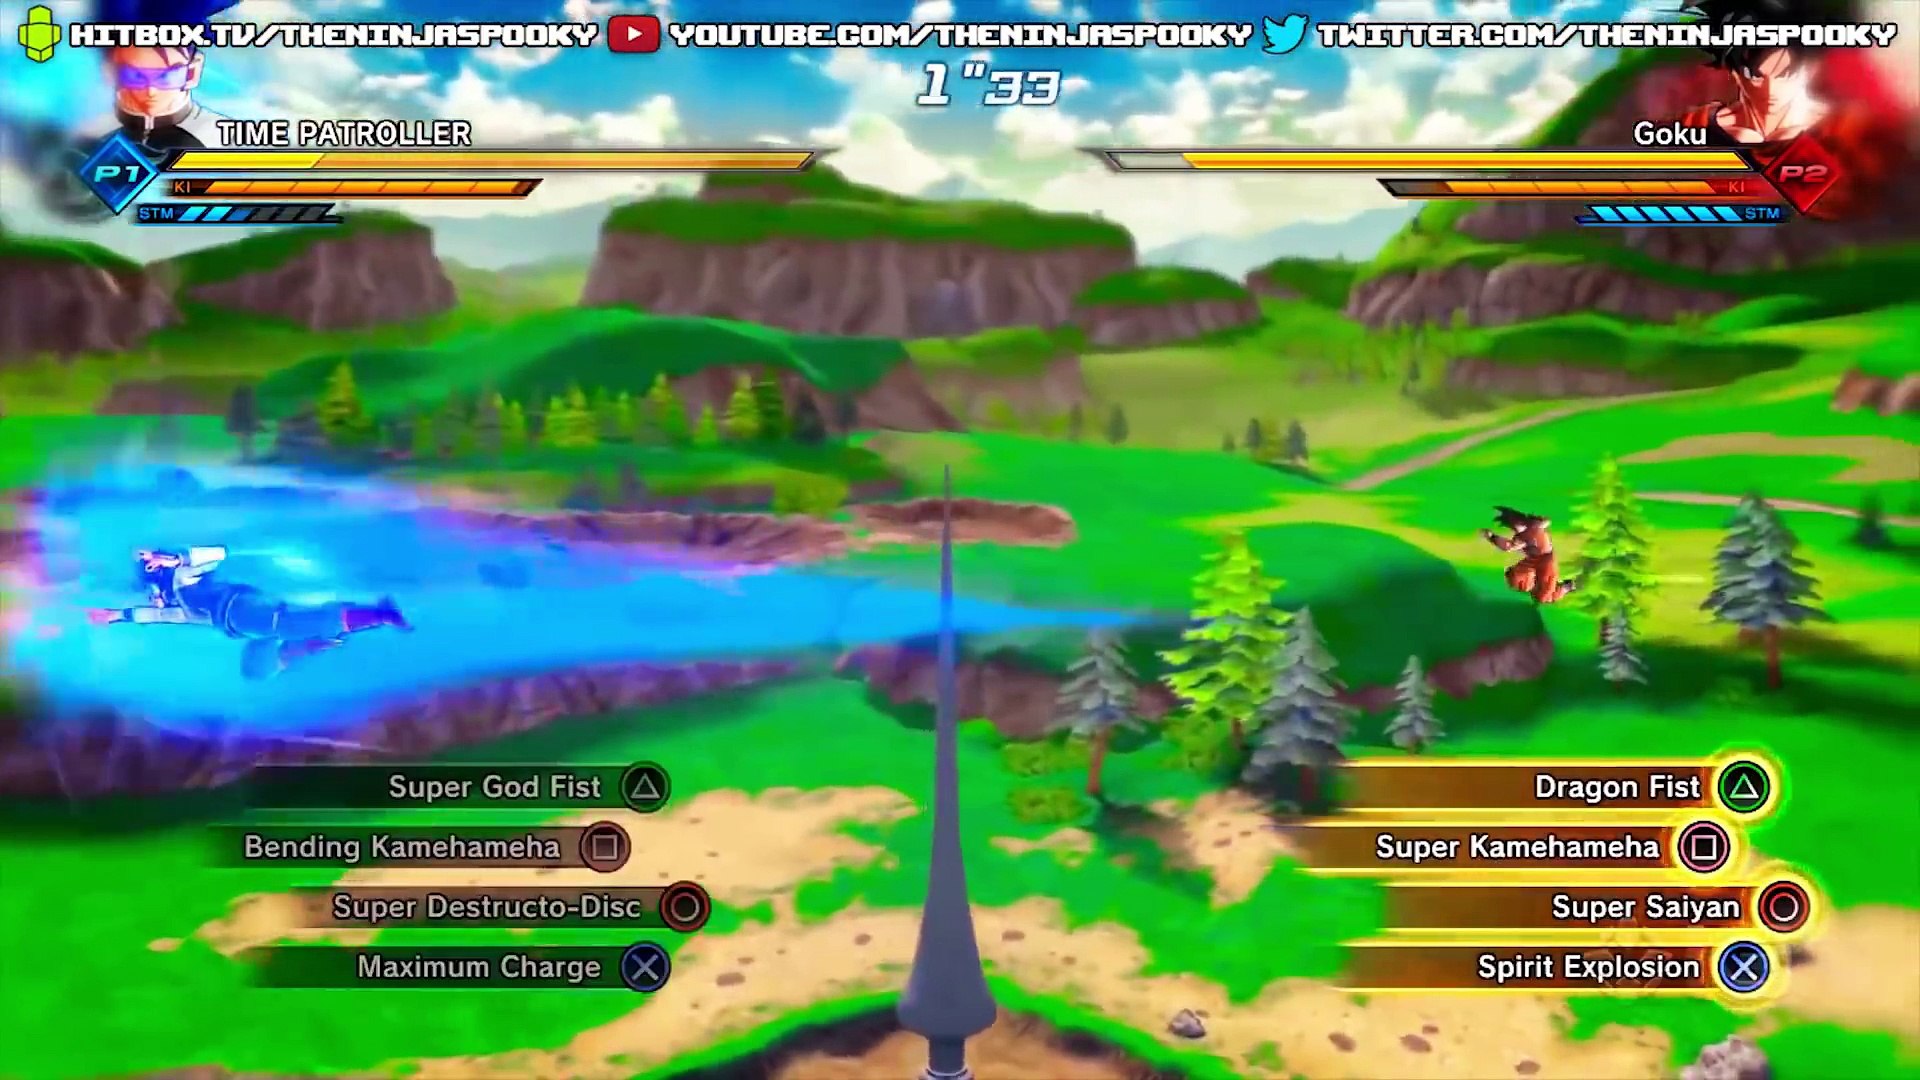 Dragonball Xenoverse 2 - Time Patroller VS. Son Goku - GAMEPLAY - Vidéo  Dailymotion